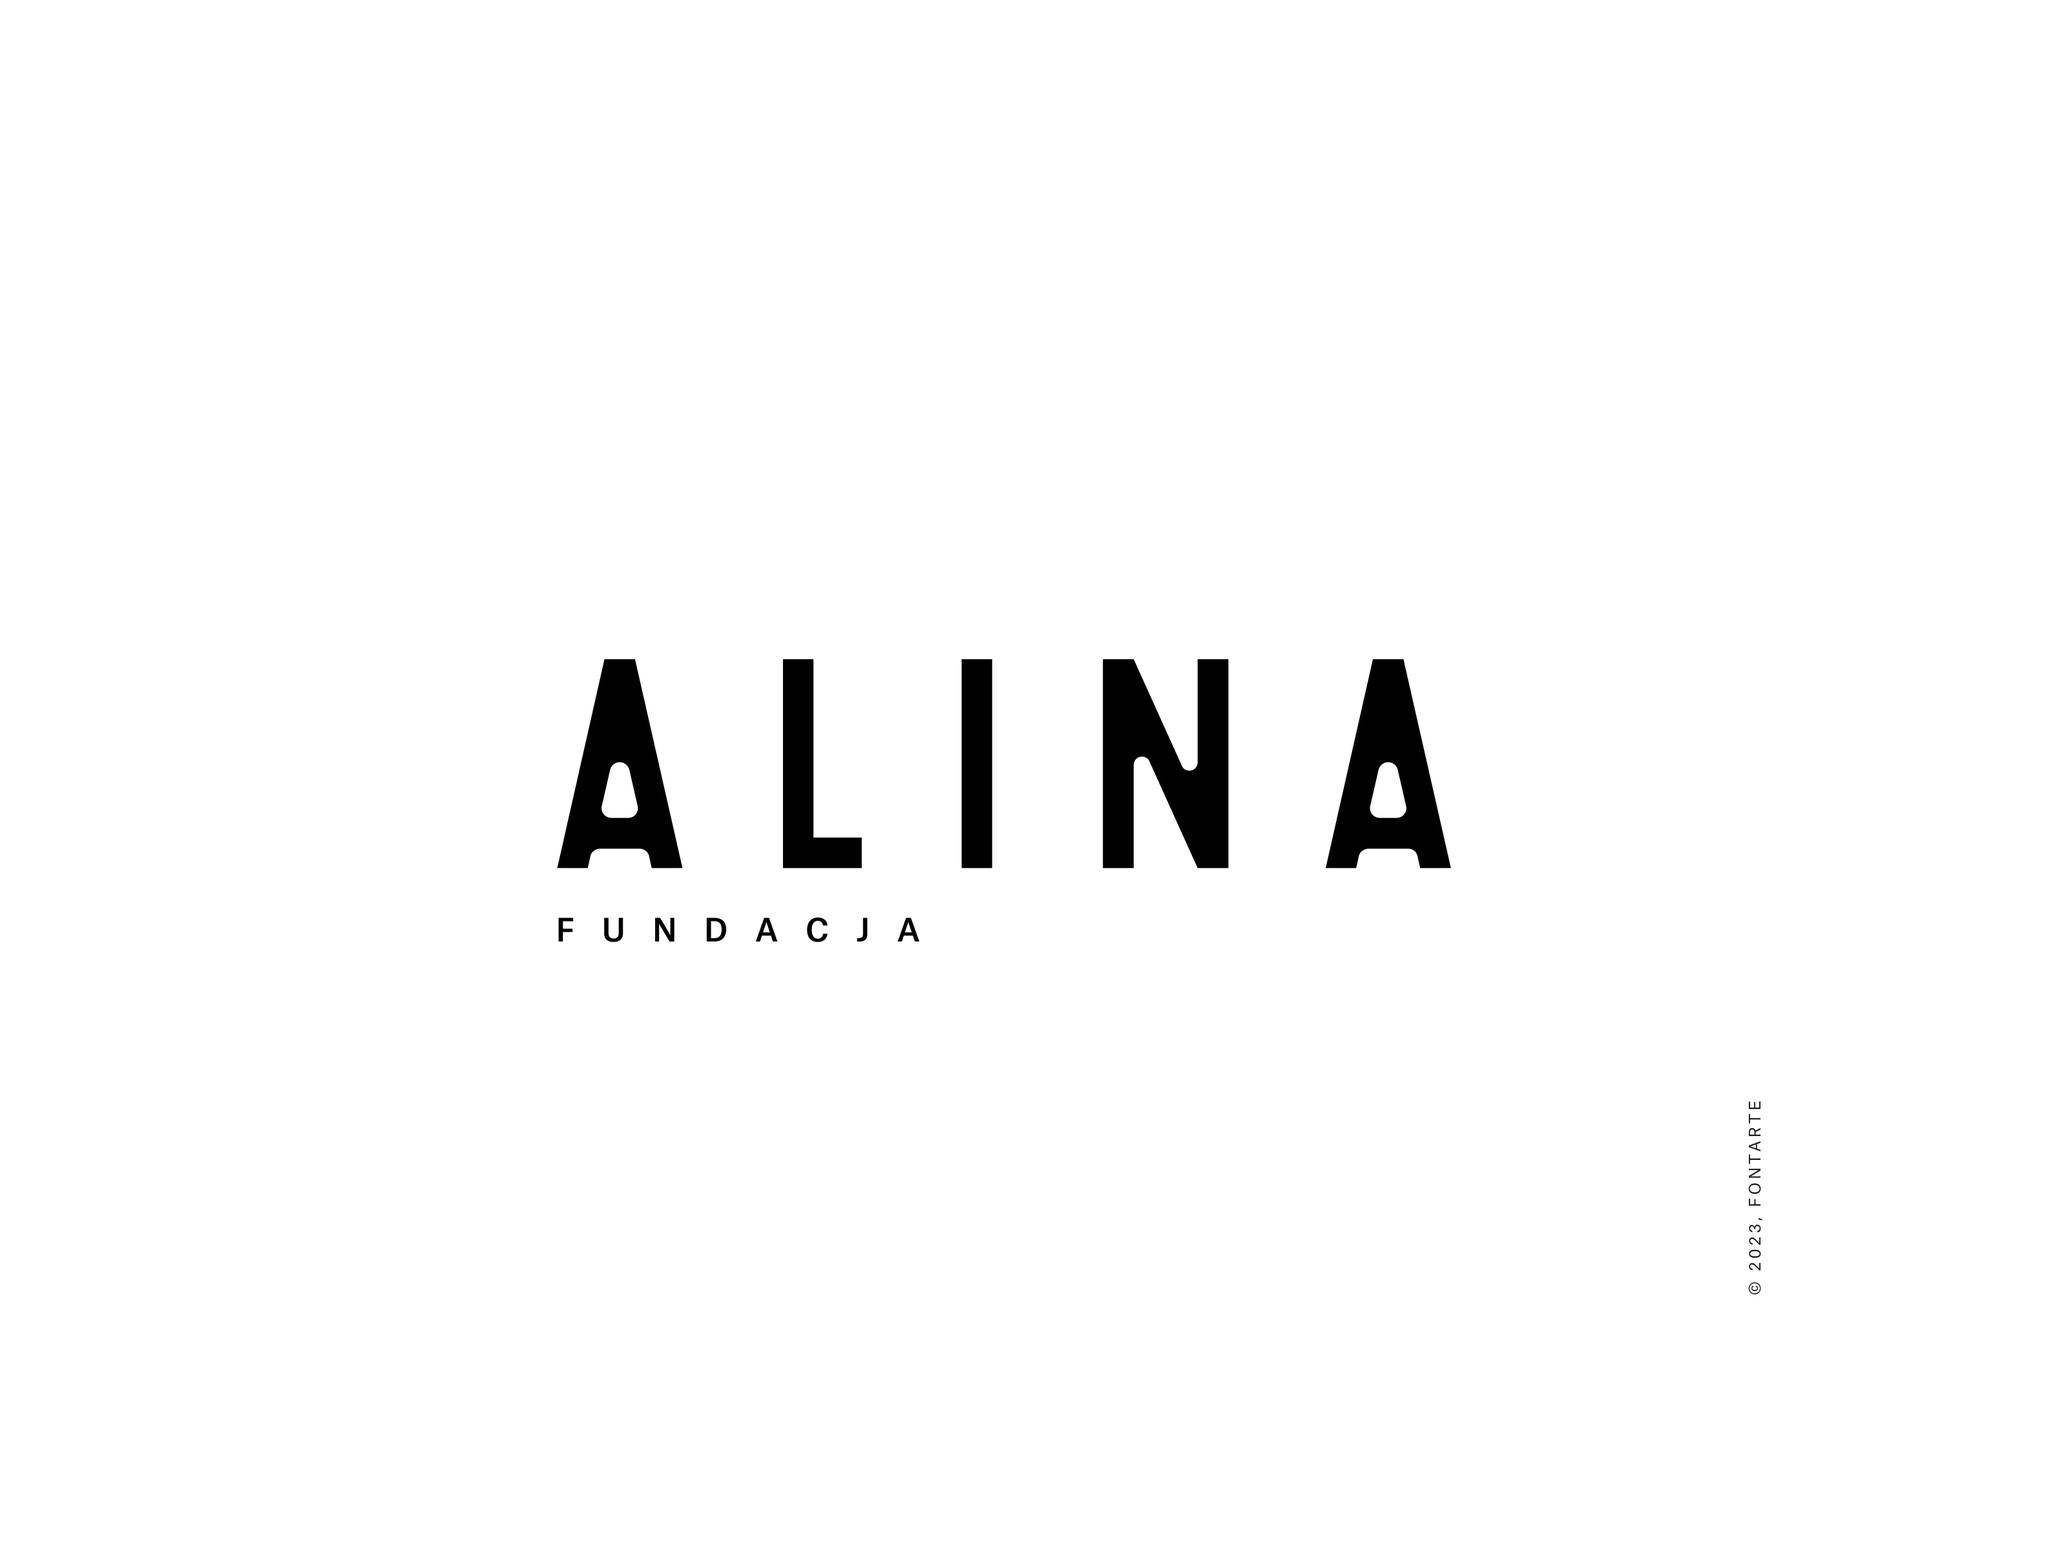 Fundacja Alina